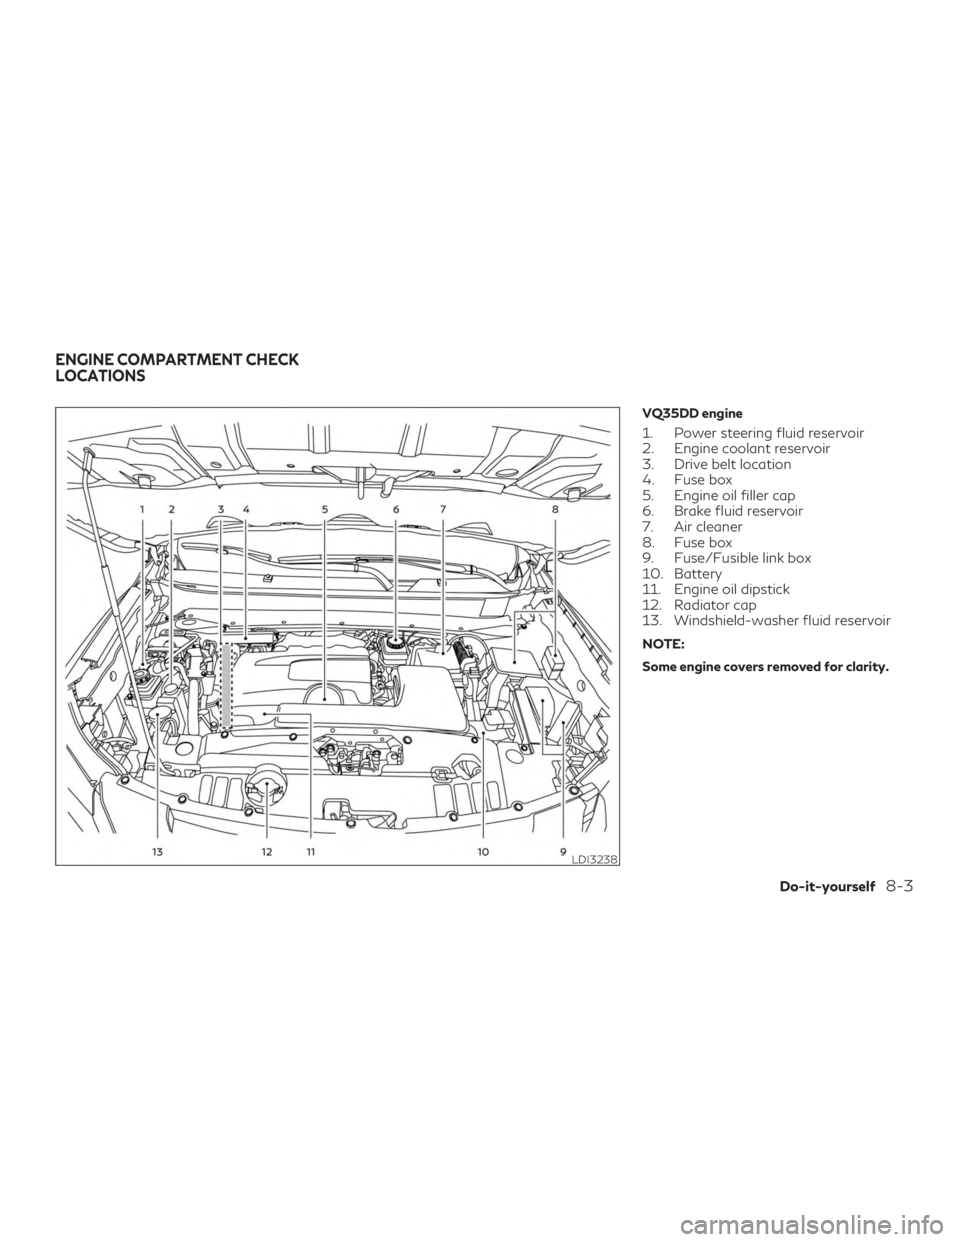 INFINITI QX60 2019  Owners Manual VQ35DD engine
1. Power steering fluid reservoir
2. Engine coolant reservoir
3. Drive belt location
4. Fuse box
5. Engine oil filler cap
6. Brake fluid reservoir
7. Air cleaner
8. Fuse box
9. Fuse/Fusi